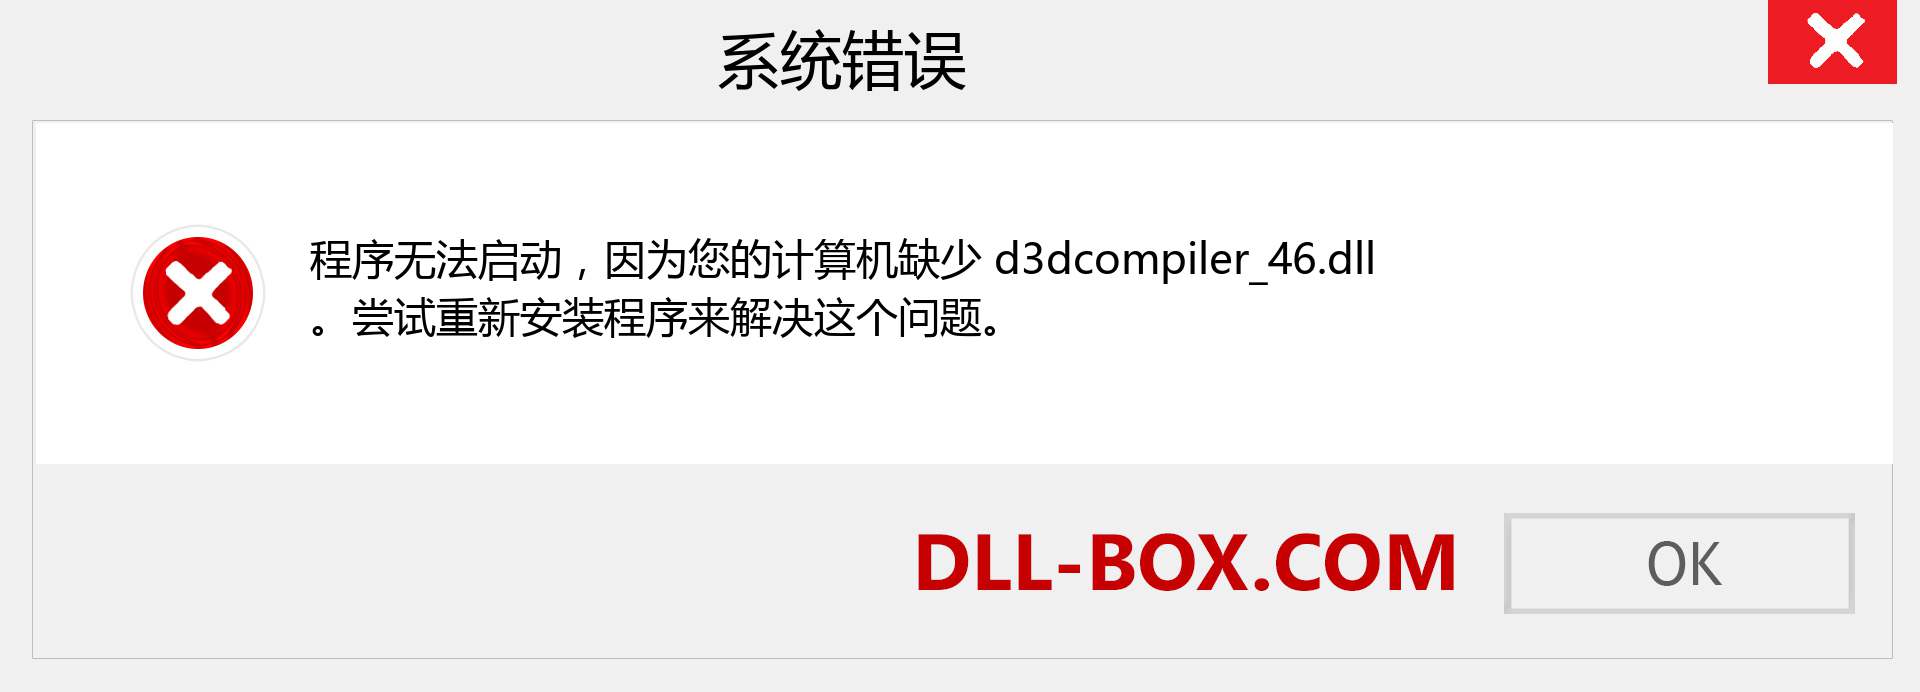 d3dcompiler_46.dll 文件丢失？。 适用于 Windows 7、8、10 的下载 - 修复 Windows、照片、图像上的 d3dcompiler_46 dll 丢失错误